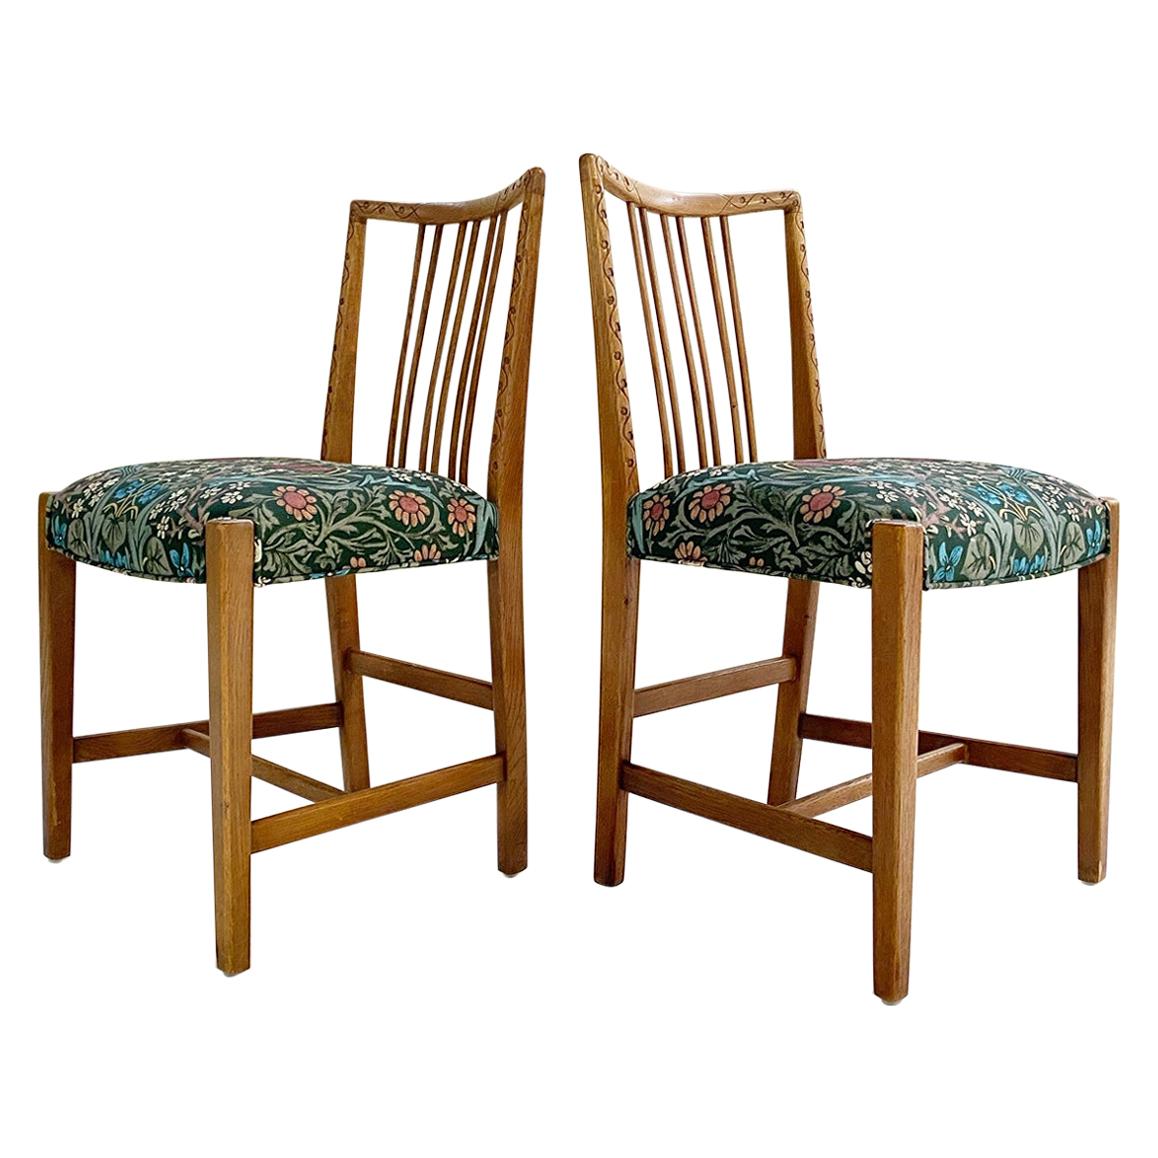 Hans Wegner Dining Chairs in William Morris Blackthorn, Pair